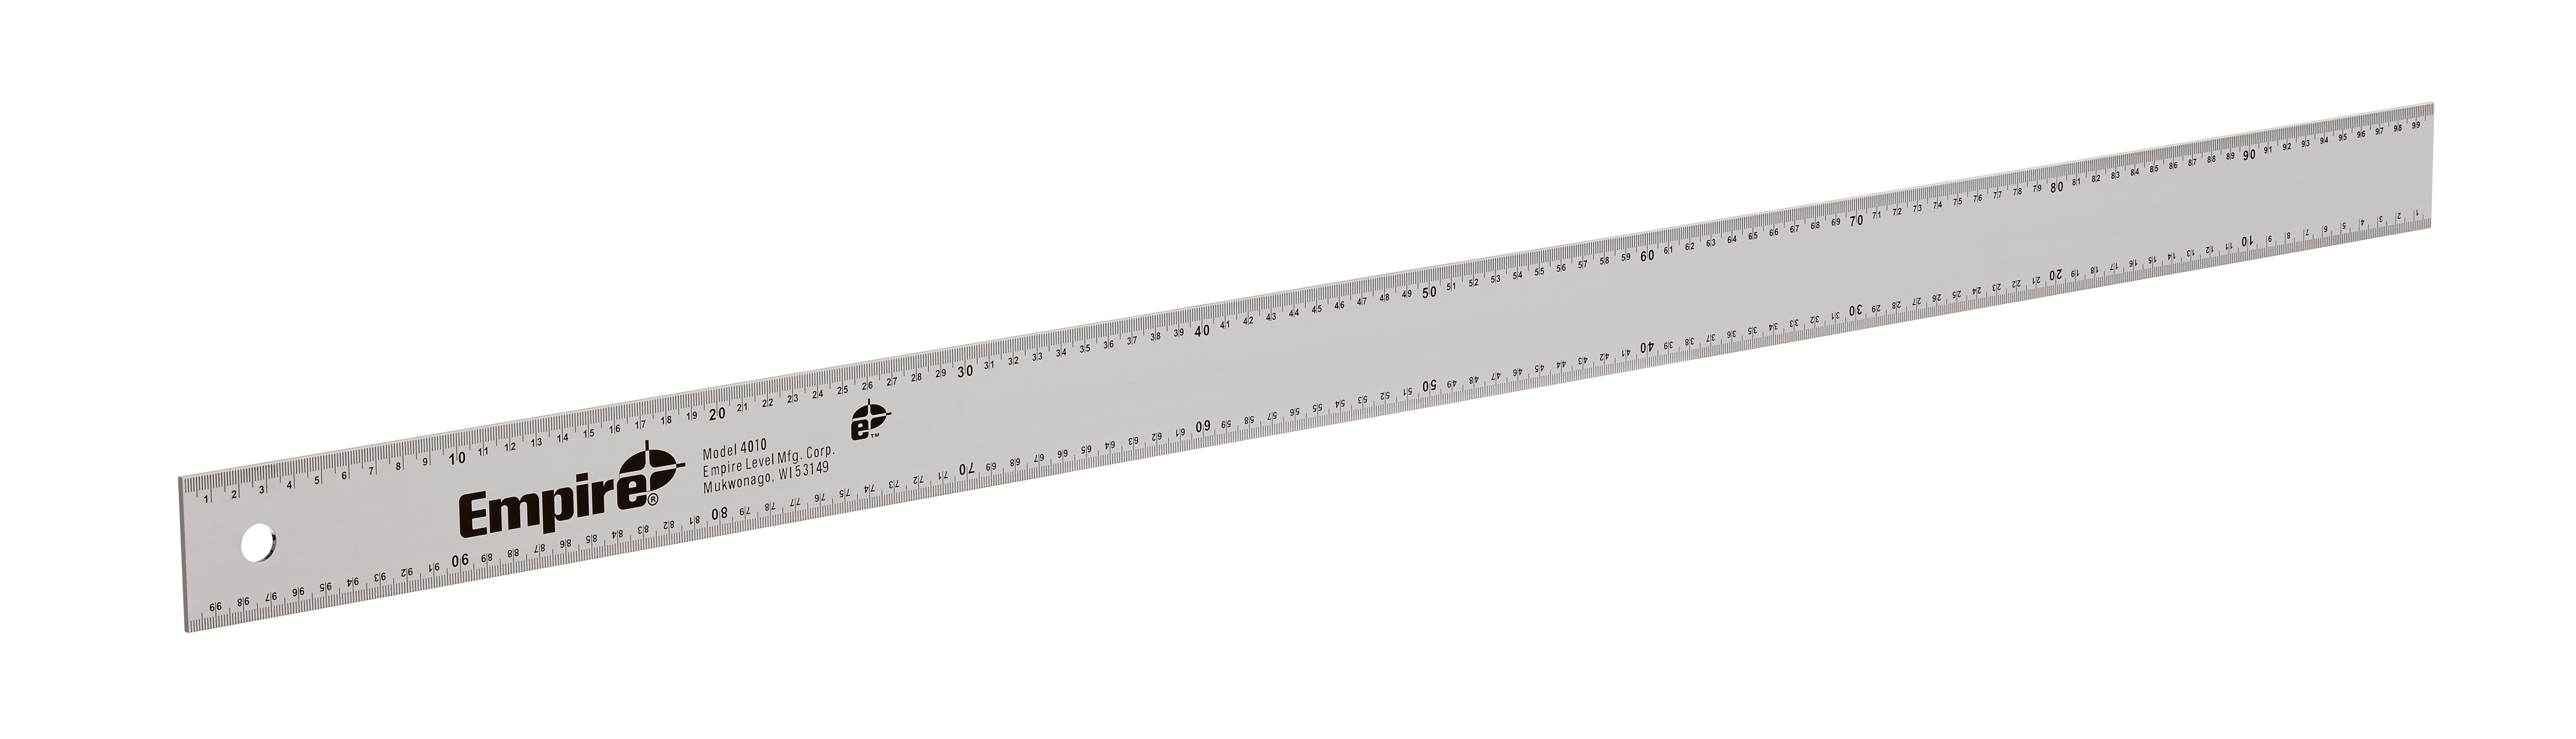 Milwaukee® Empire® 4010 Heavy Duty Straight Edge Ruler, Graduations 1 mm, Aluminum, Silver